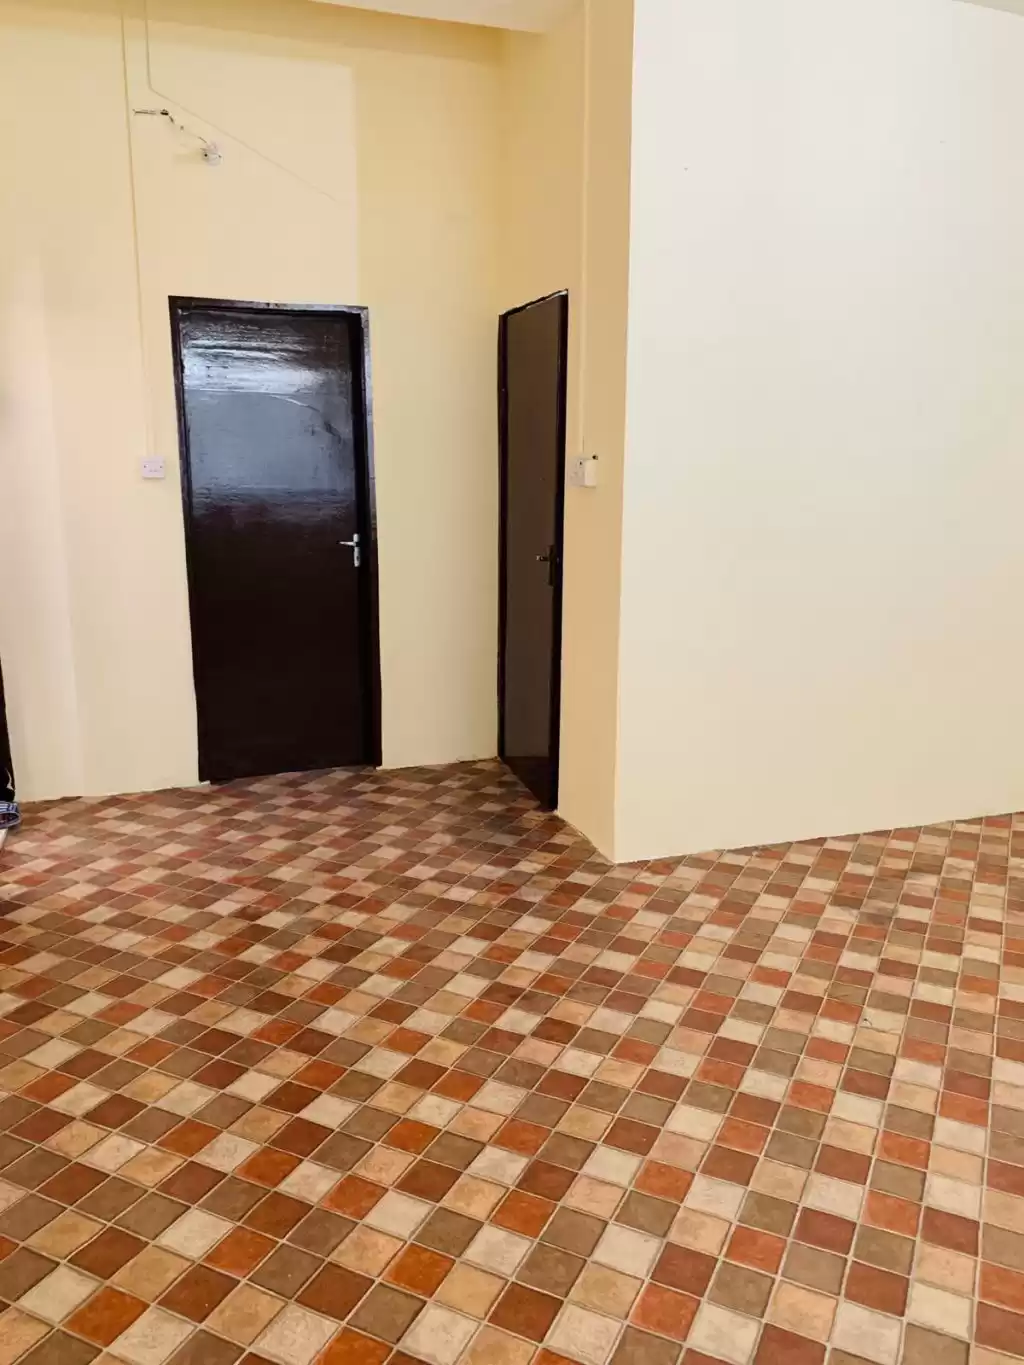 Résidentiel Propriété prête Studio U / f Appartement  a louer au Al-Sadd , Doha #13415 - 1  image 